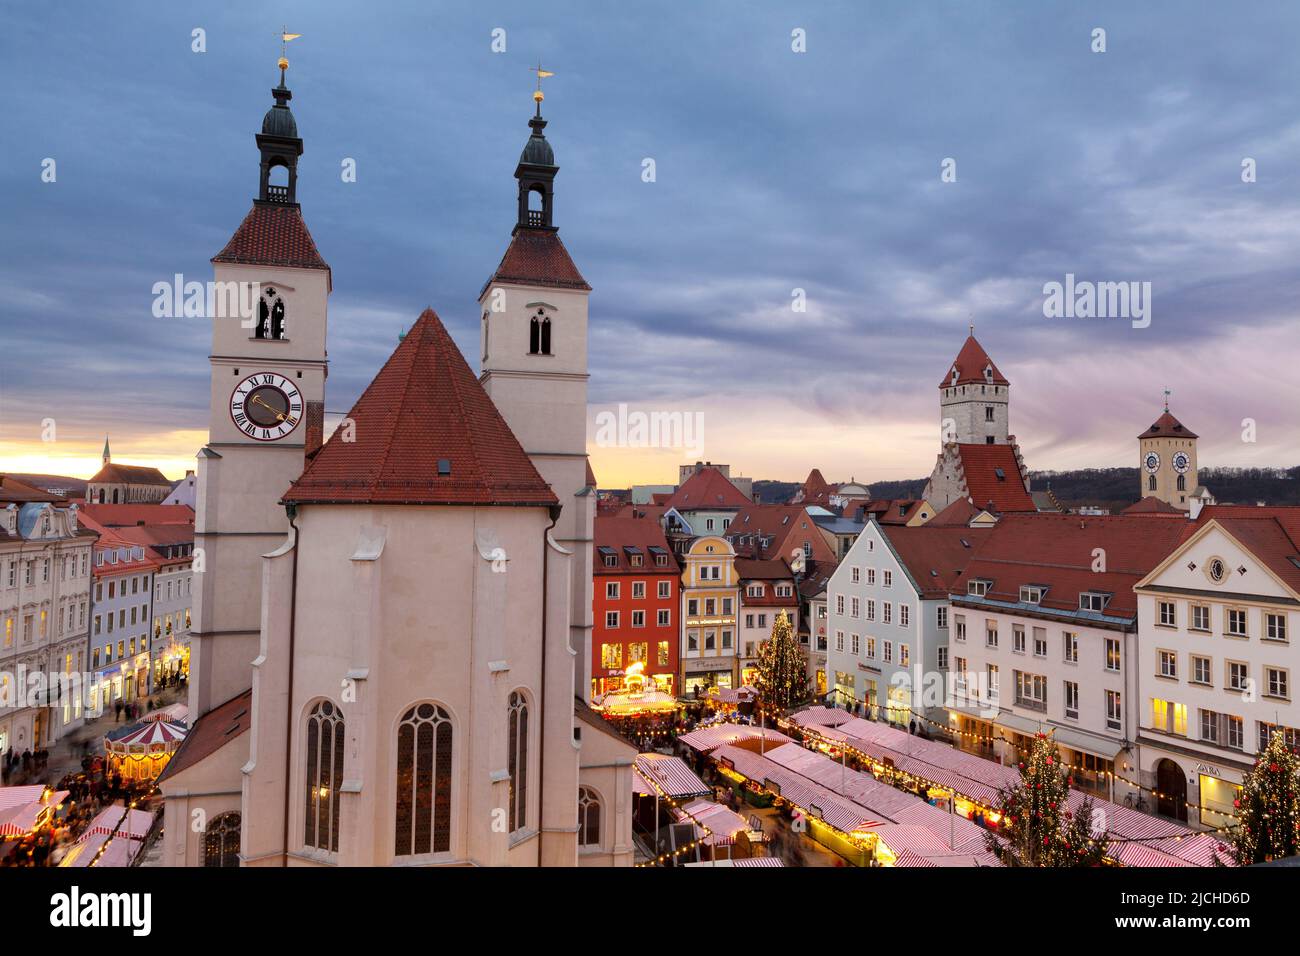 Overview of the Christmas Market in Neupfarrplatz, Regensburg, Upper Palatinate, Bavaria, Germany Stock Photo